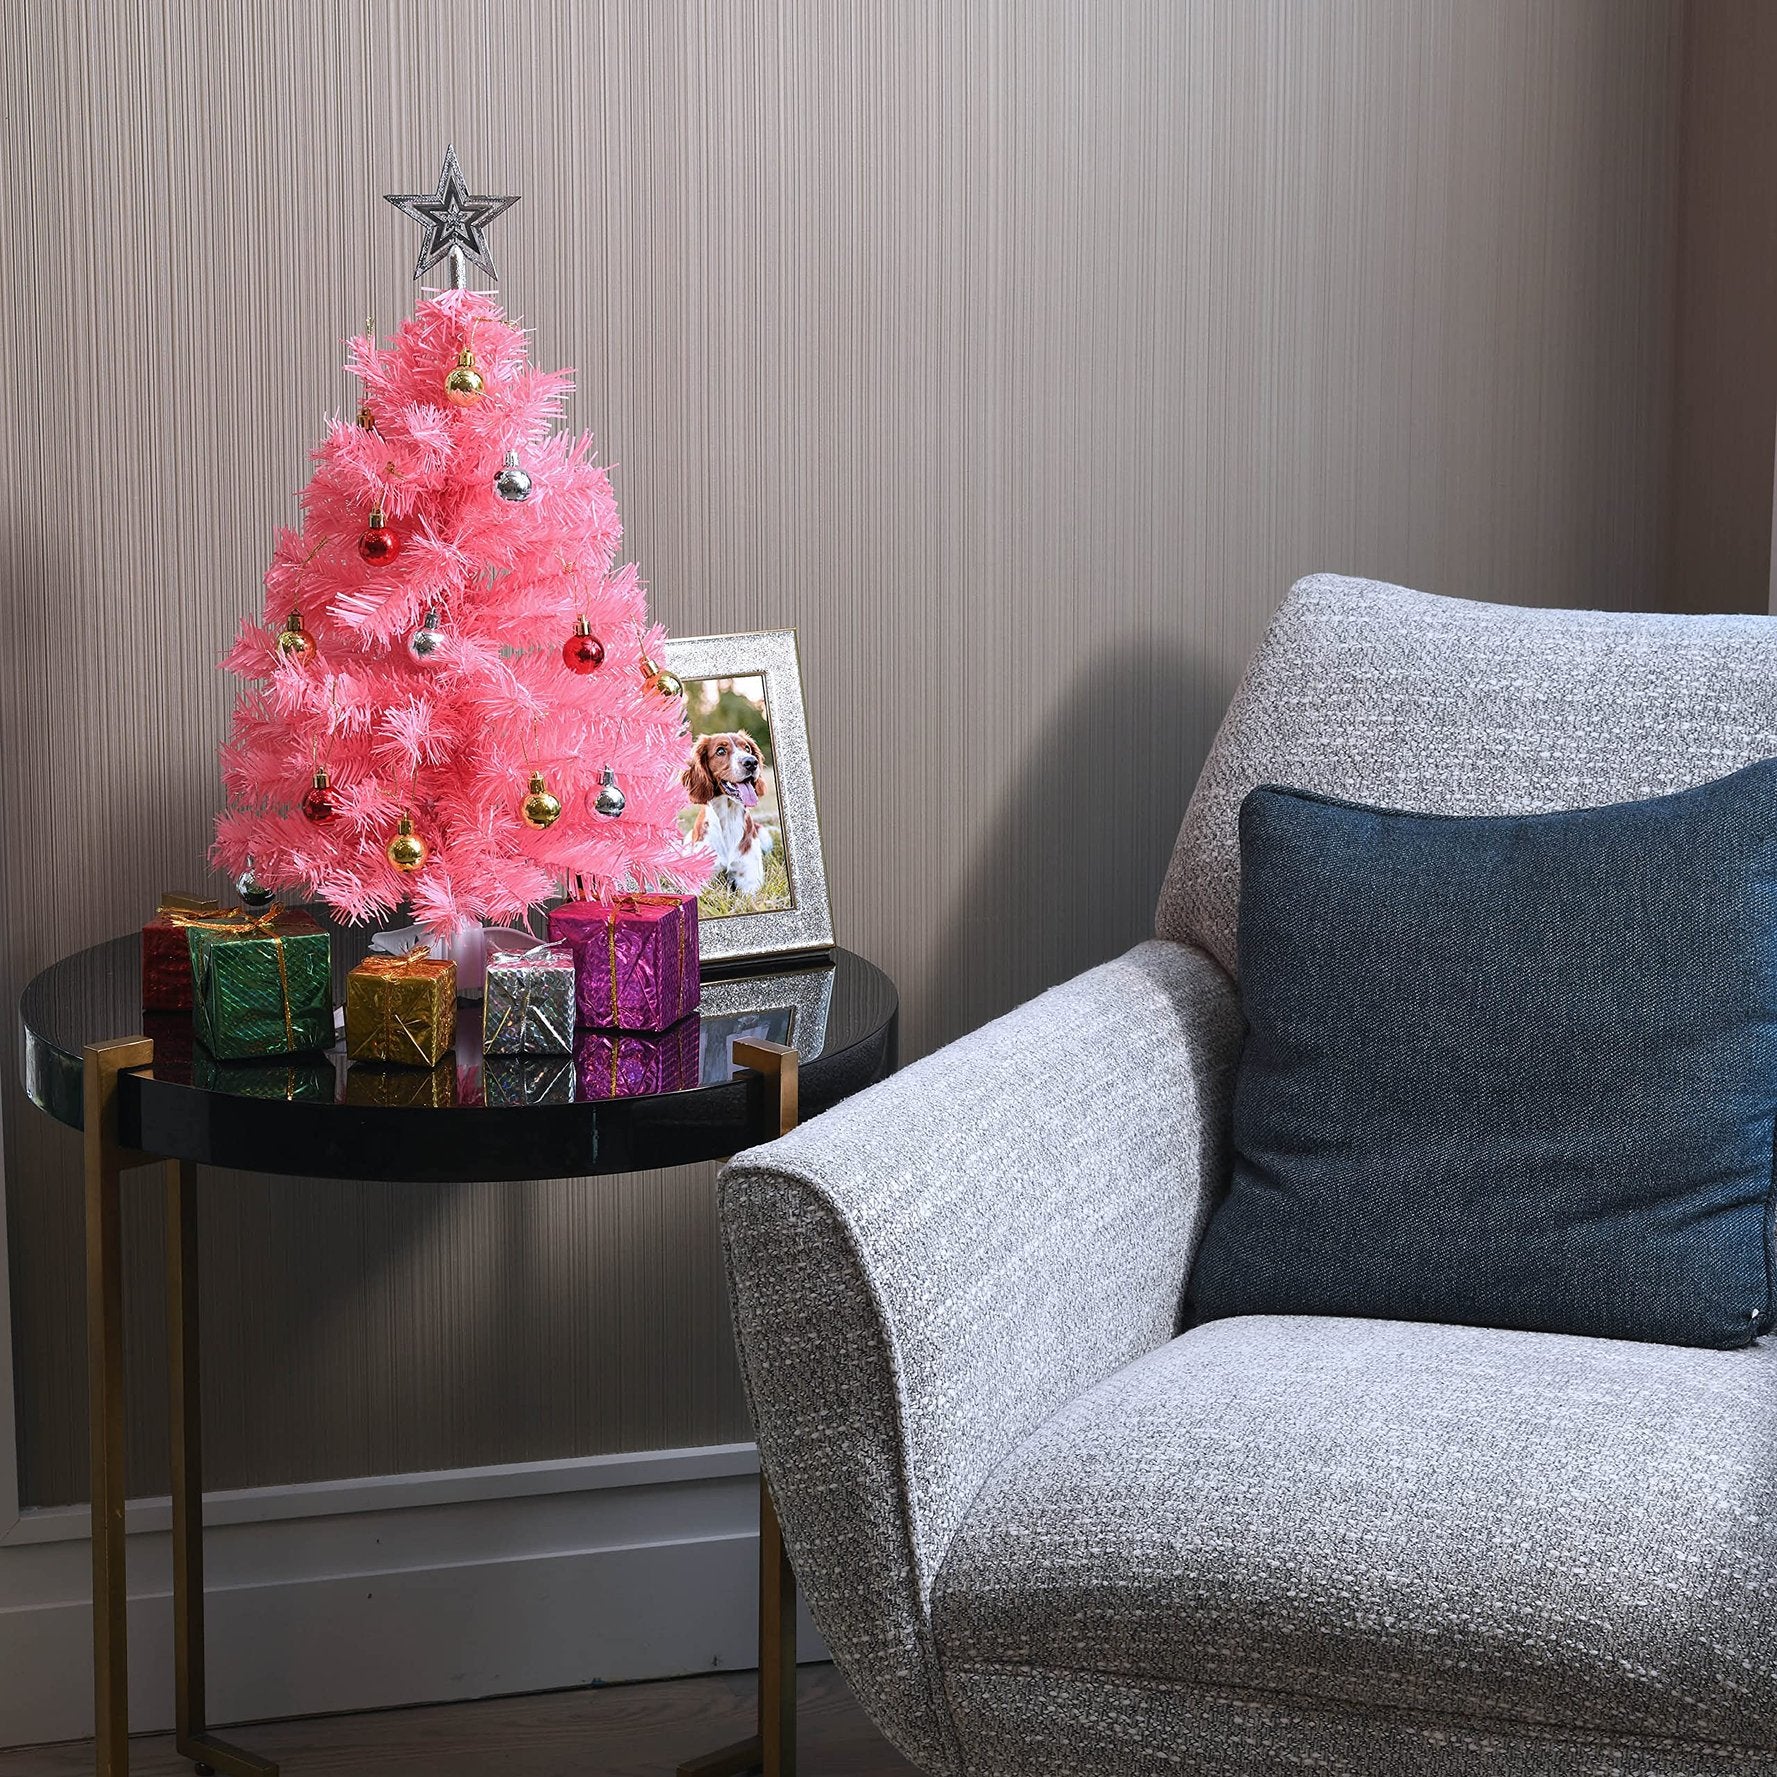 Prextex 23” Mini Pink Christmas Tree with Lights Ornaments & Presents - Small Pink Christmas Tree with Lights Pink Mini Christmas Tree - Warm White LED Lights, Pink…